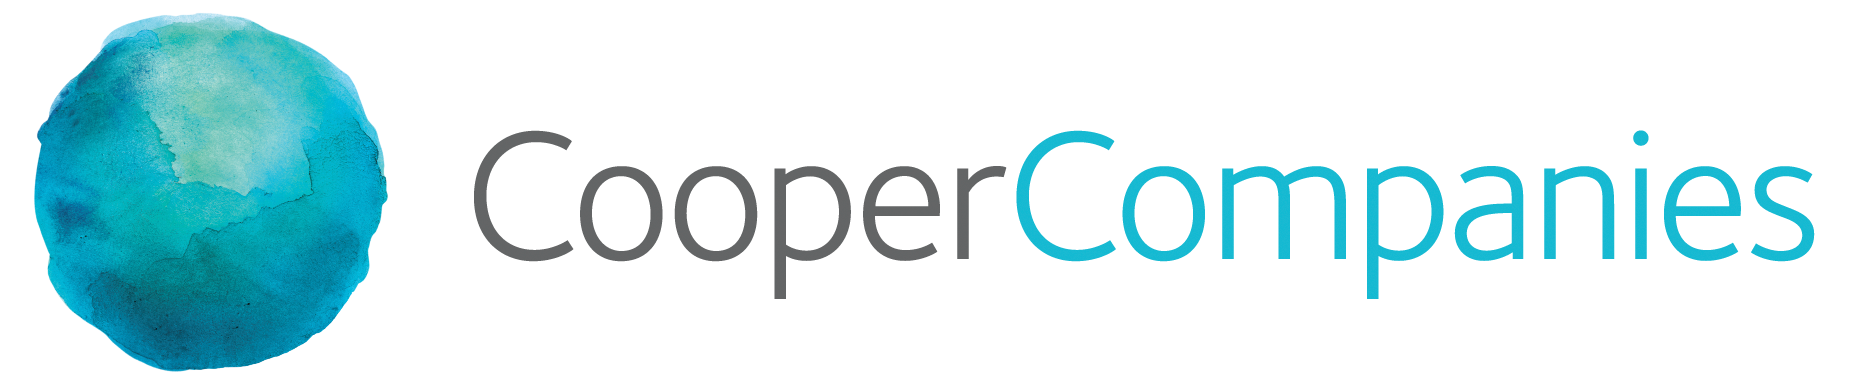 Cooper Companies logo